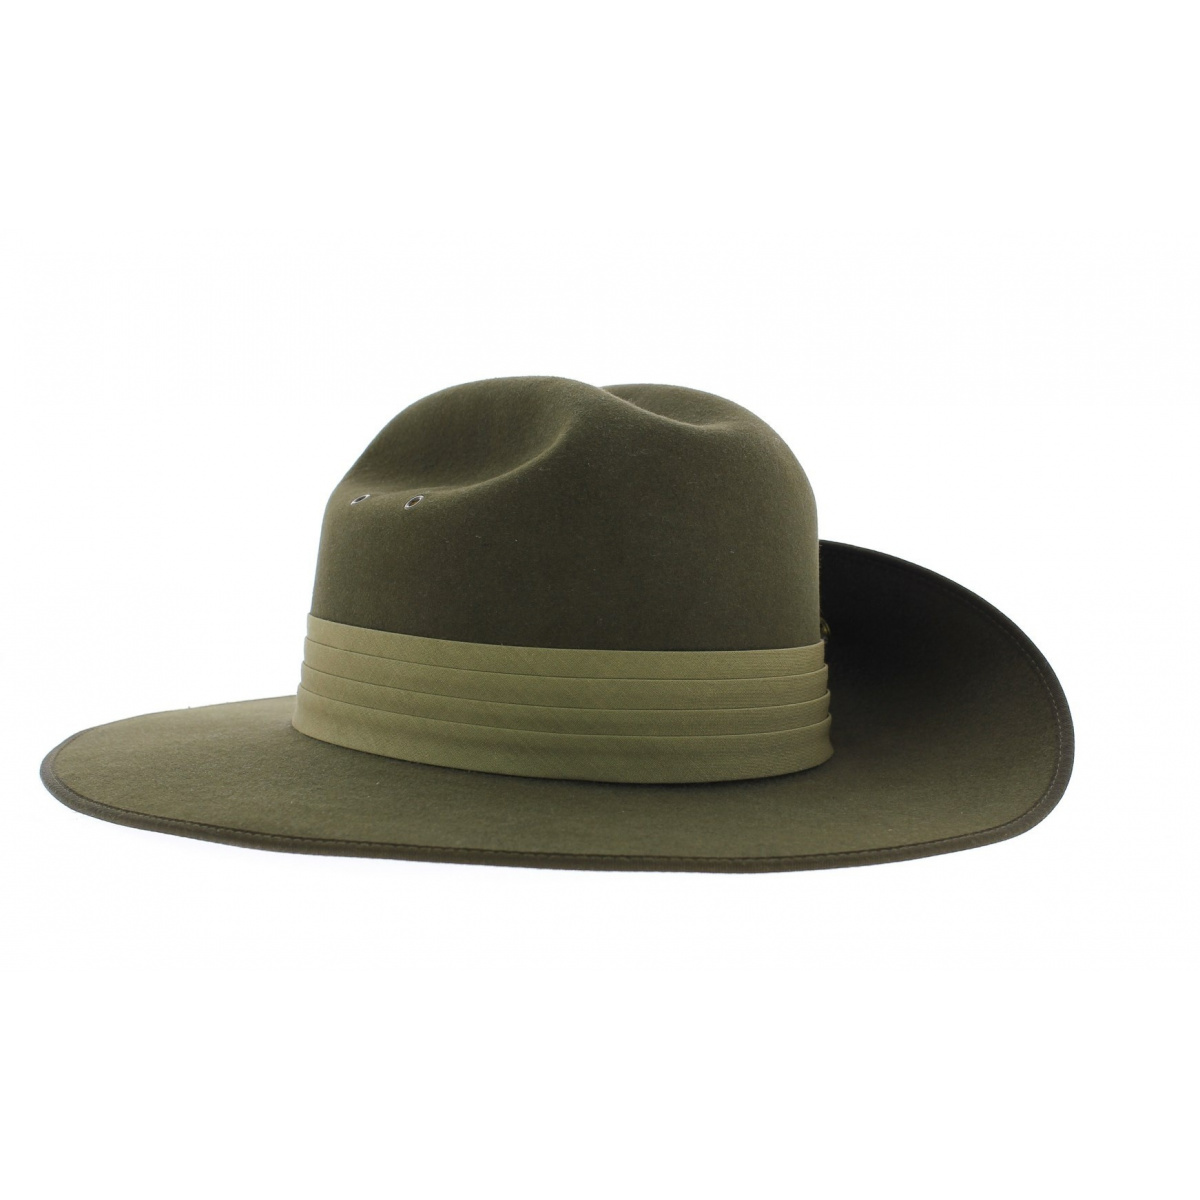 Akubra felt hat - Military Reference : 770 | Chapellerie Traclet